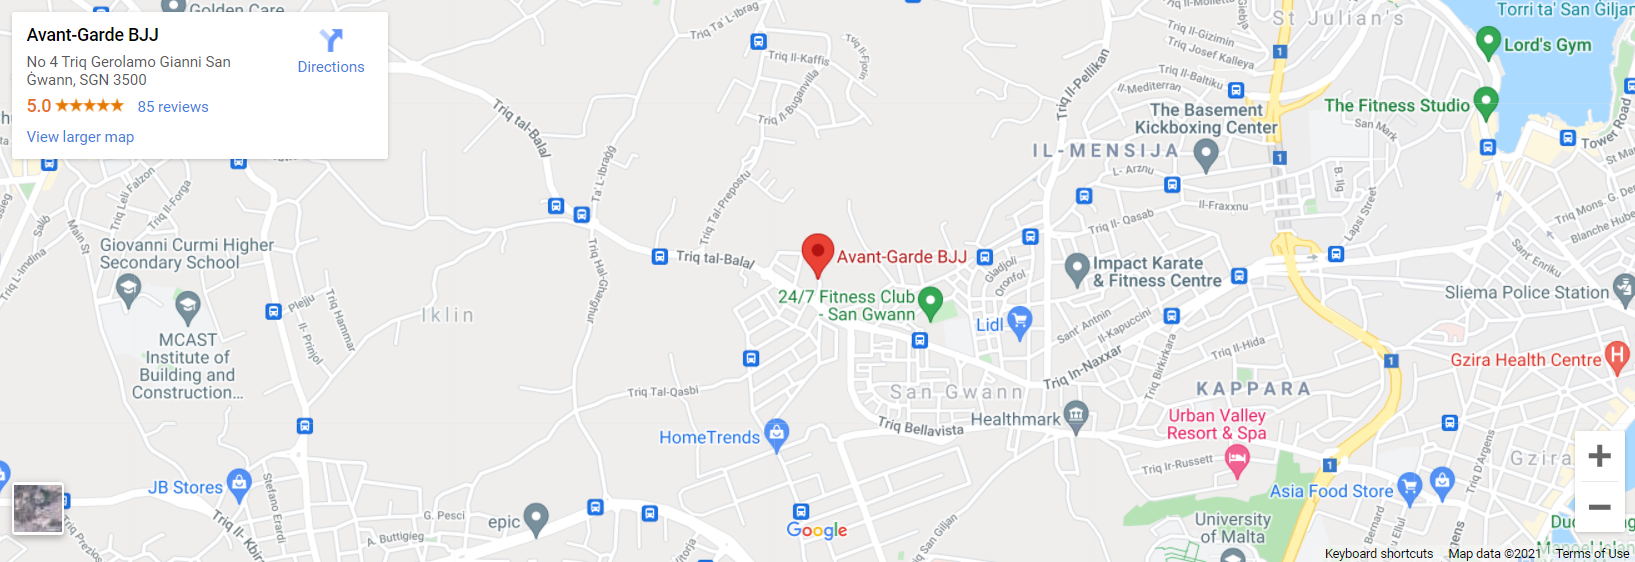 Where to find Avant Garde Brazilian Jiu Jitsu Malta